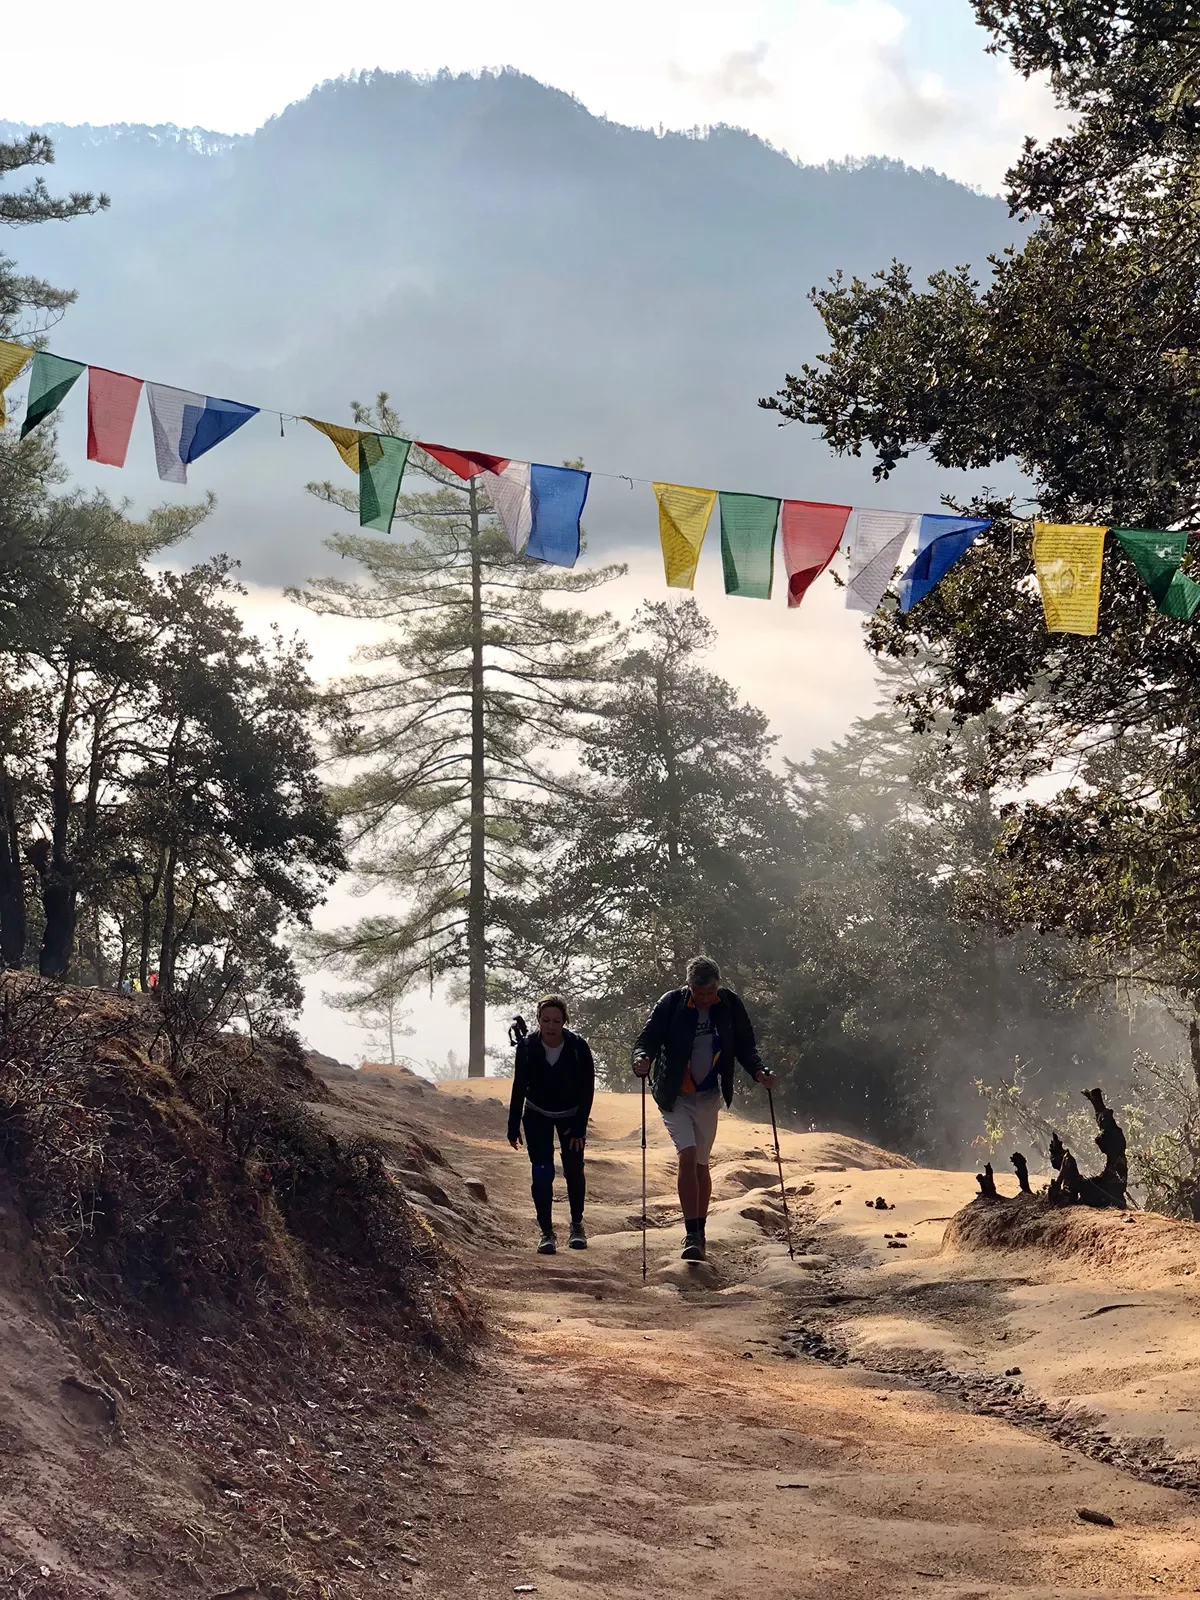 Hiking along a dirt hiking trail in Bhutan